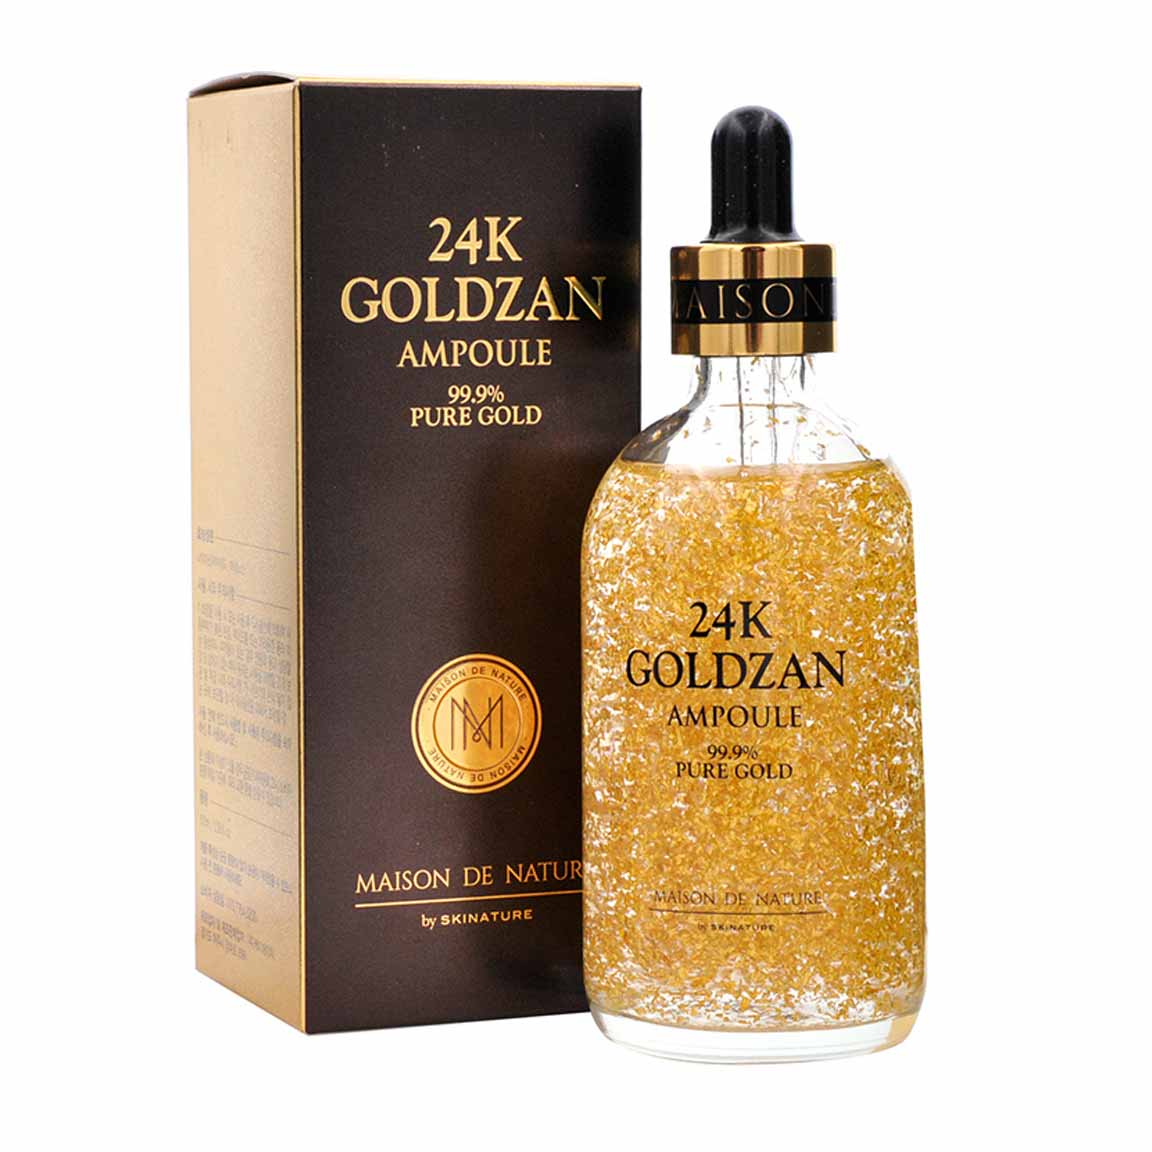 24k Goldzan Ampoule Pure Gold Face Serum 30ml